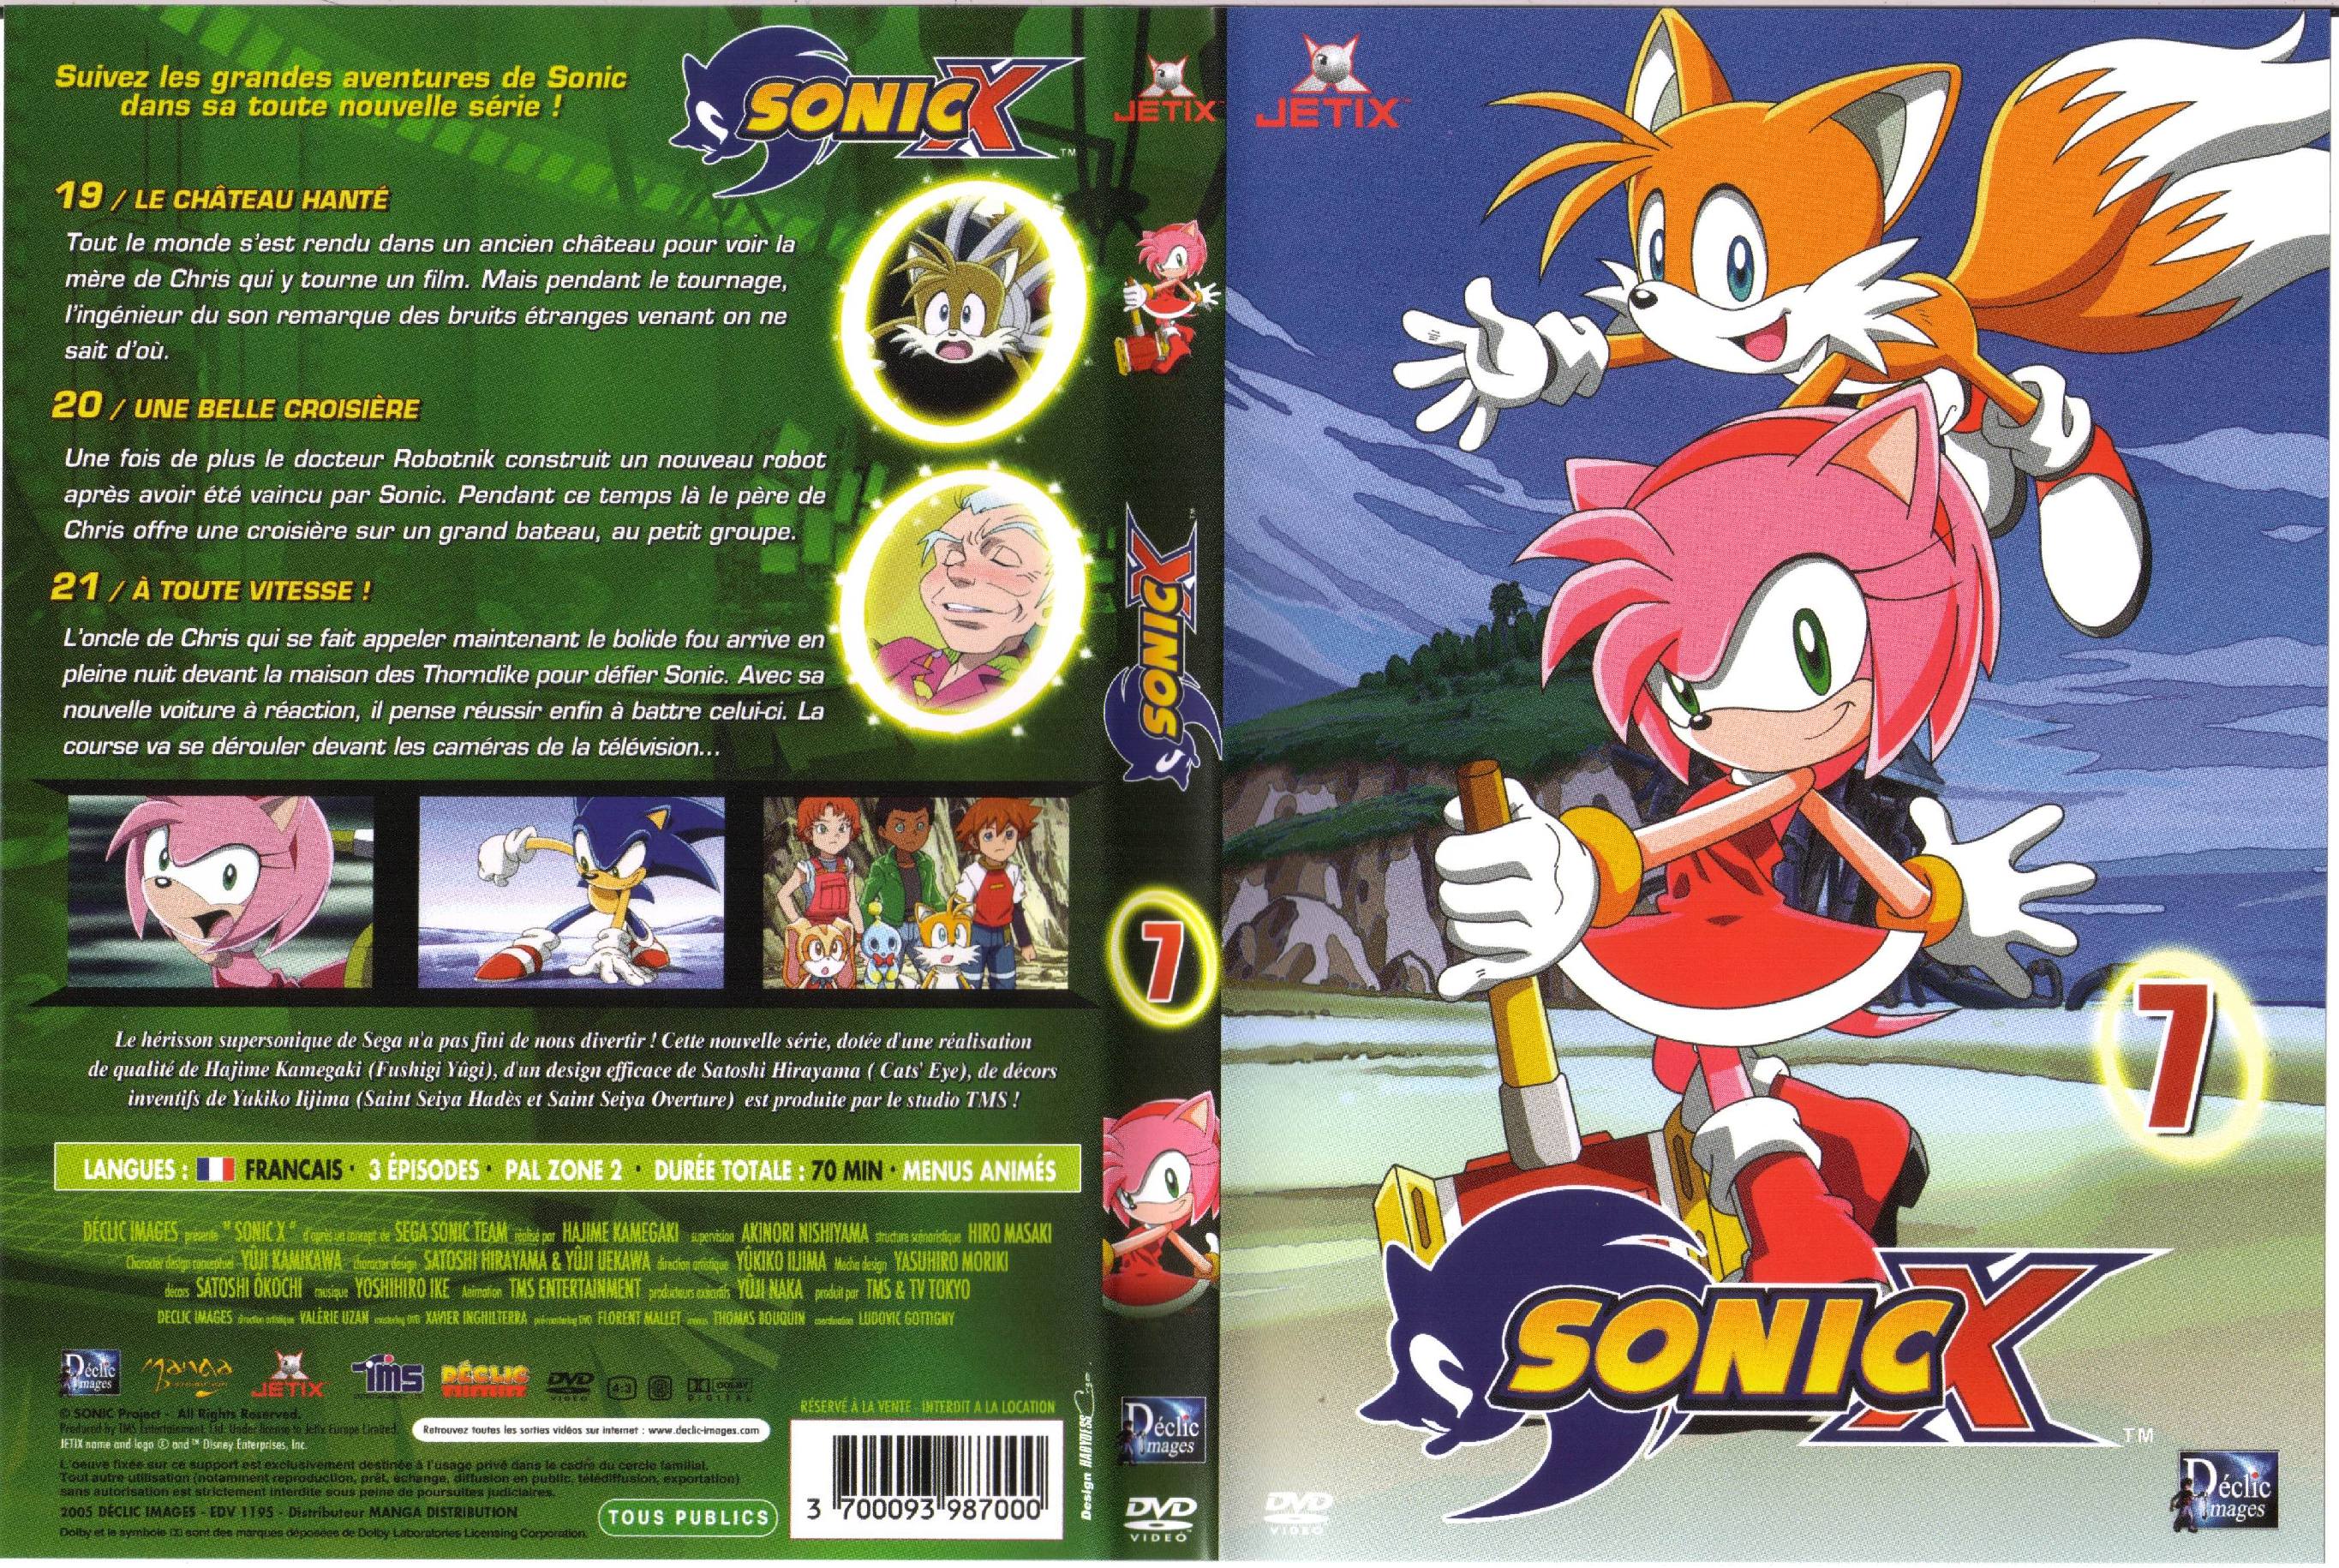 Sonic X Dvd Picture Sonic X Dvd Wallpaper